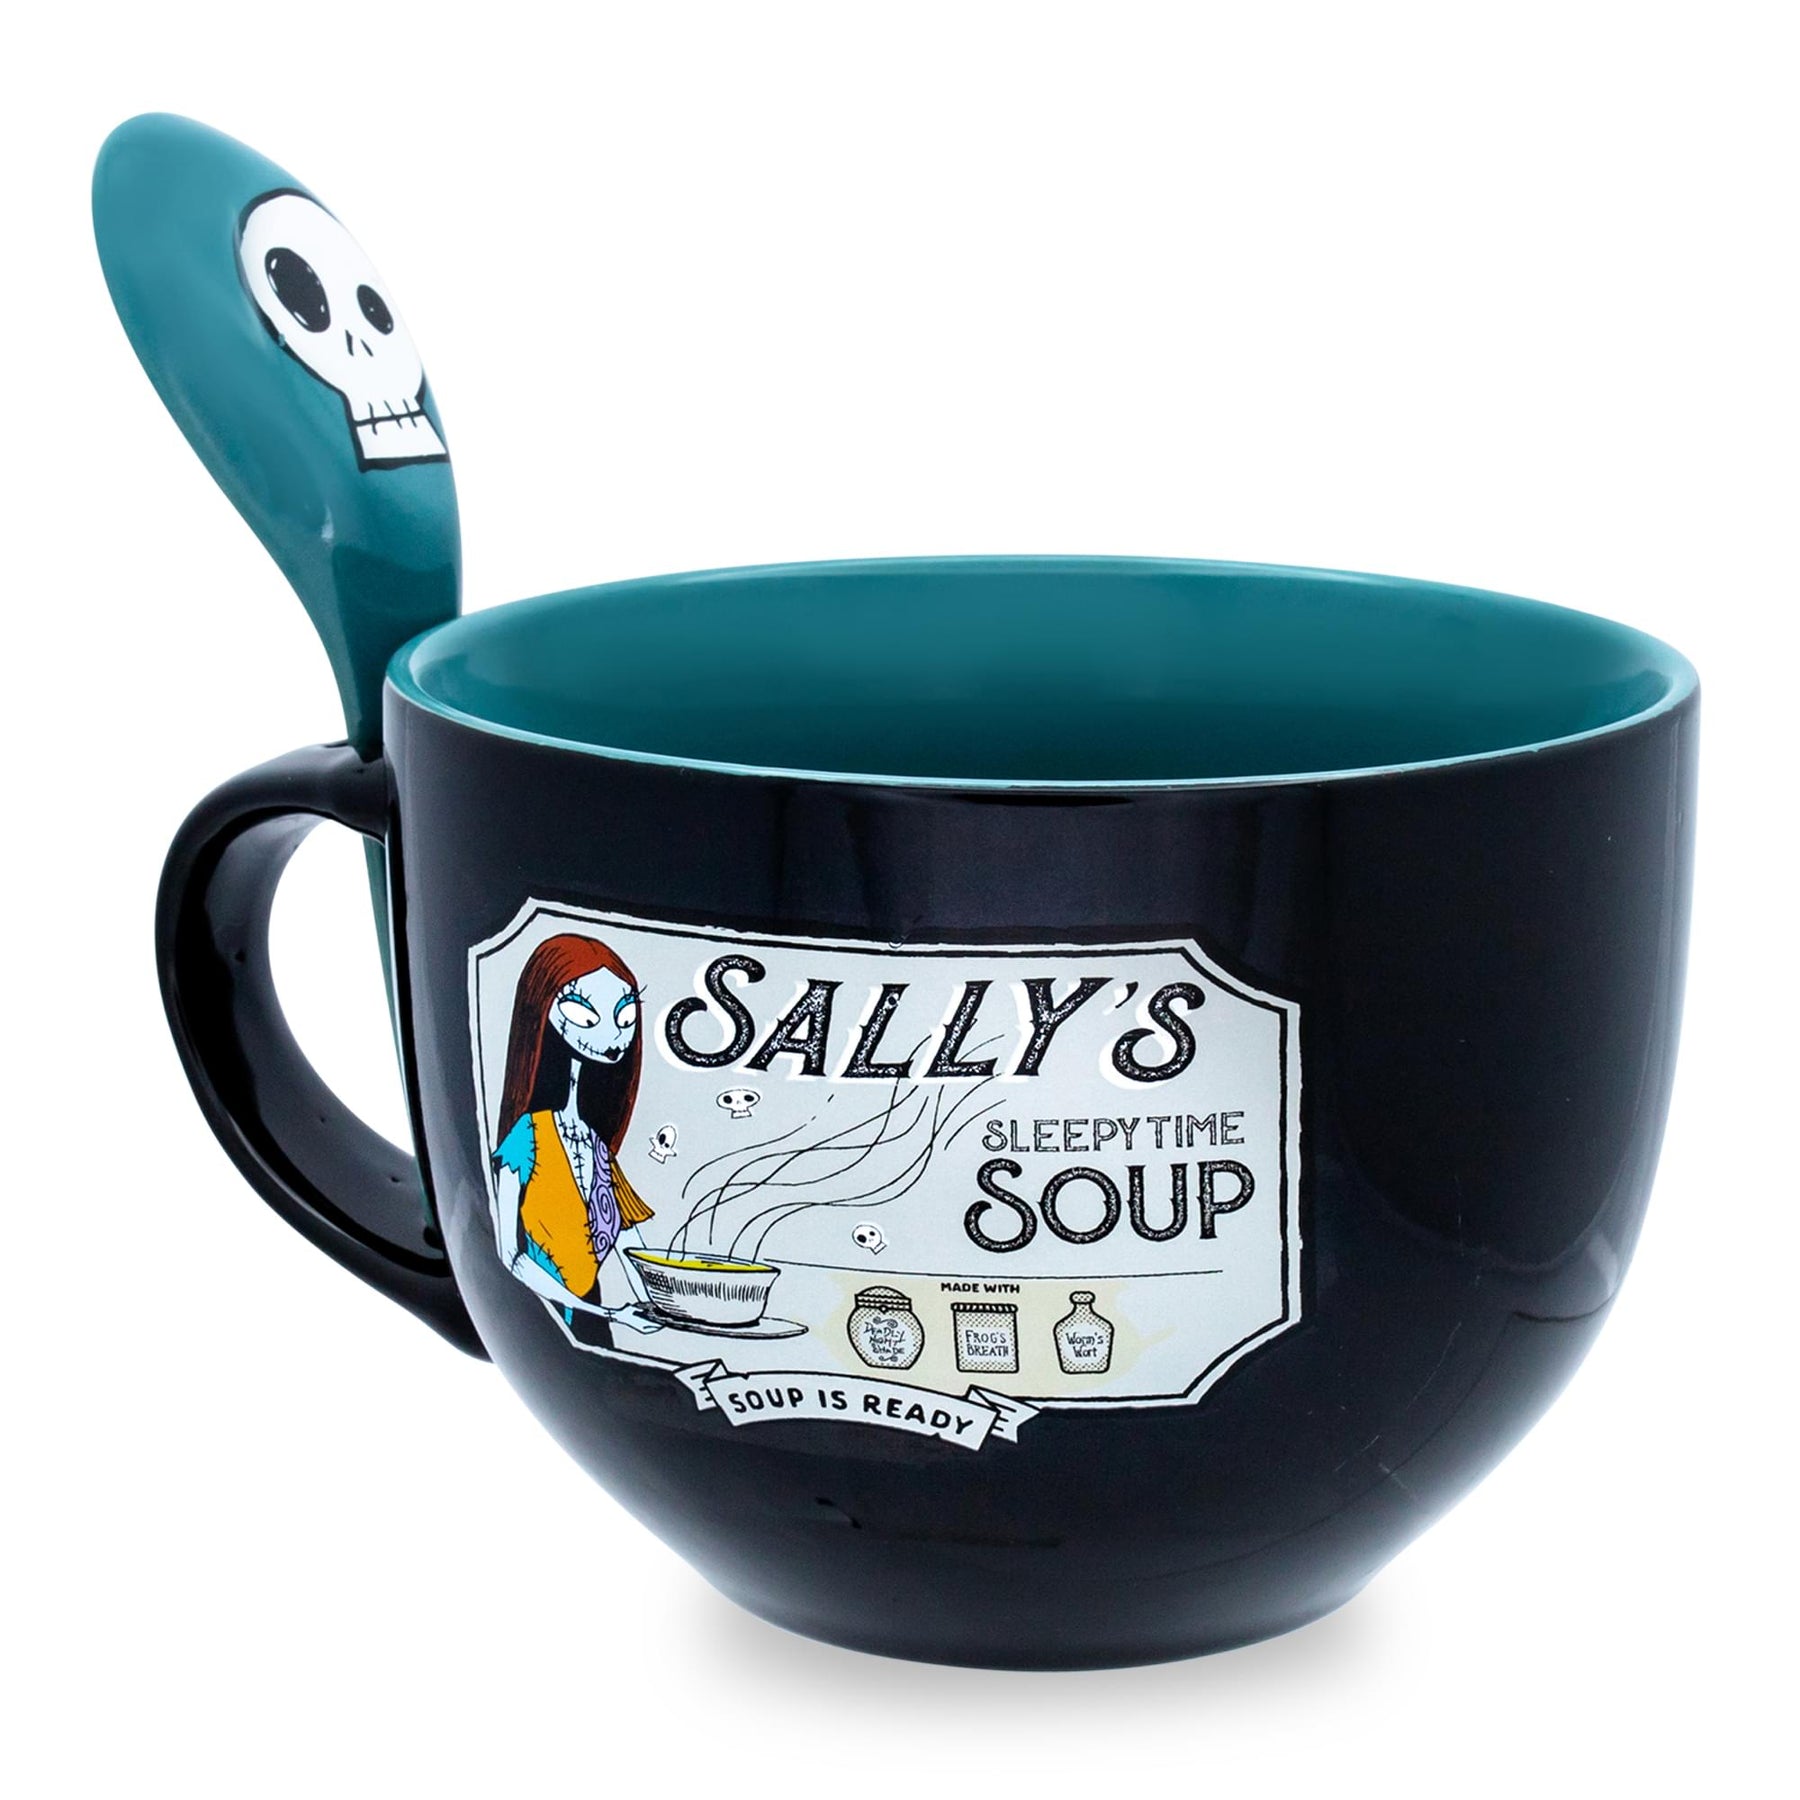 Disney The Nightmare Before Christmas "Sally's Sleepy Time" Ceramic Soup Mug